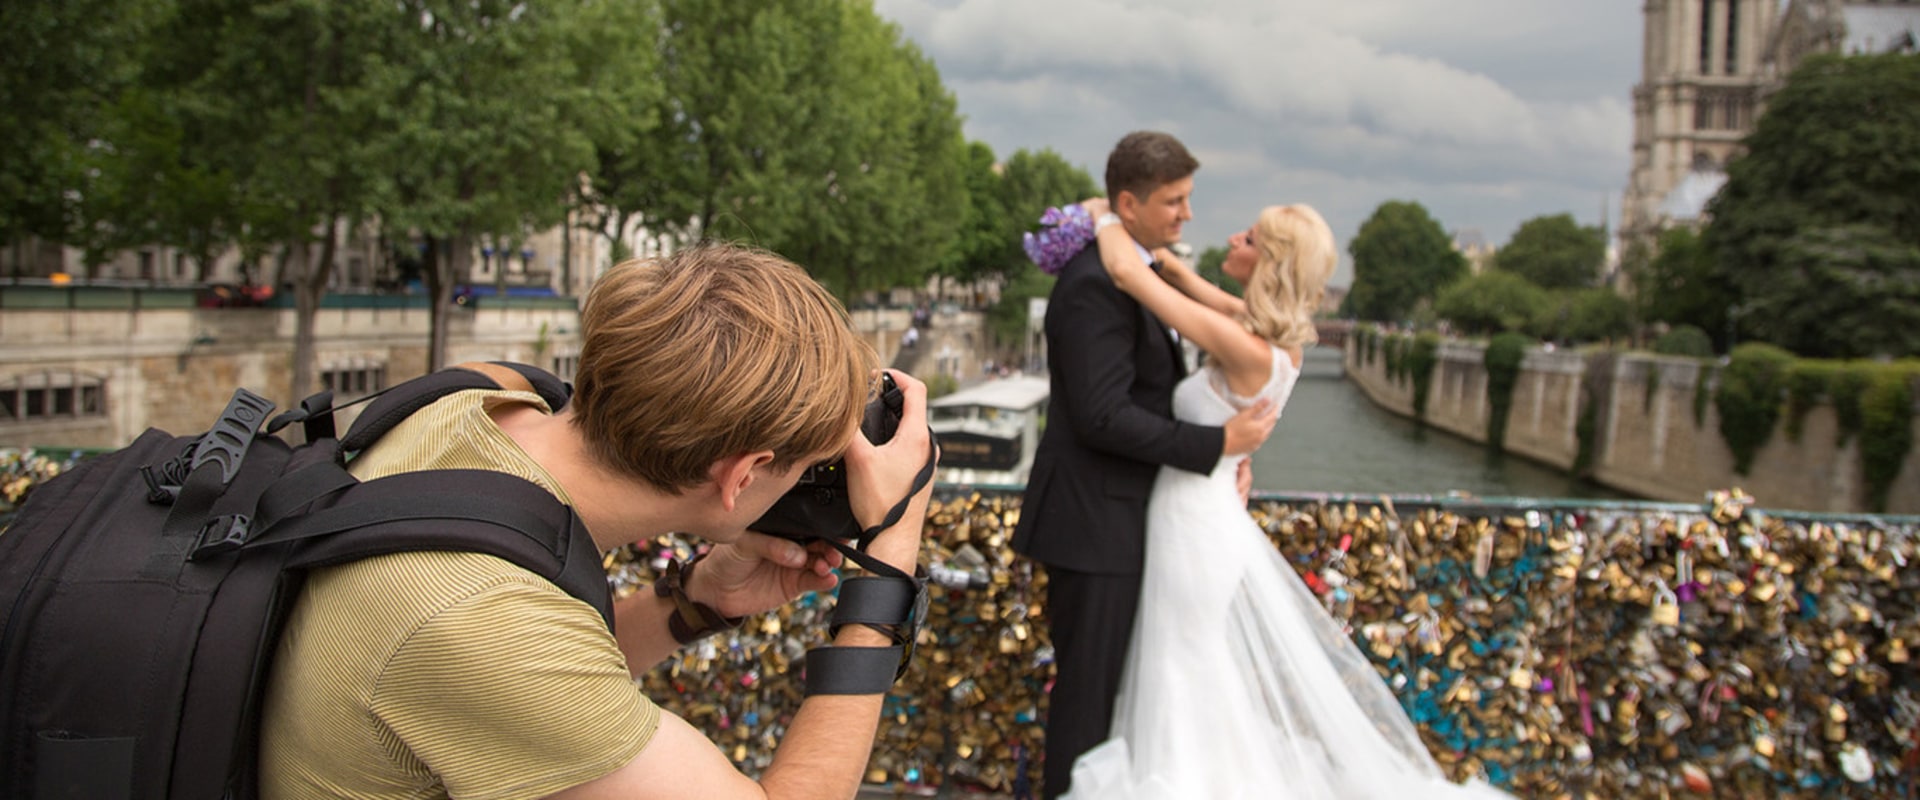 Reserva bodas como fotógrafo